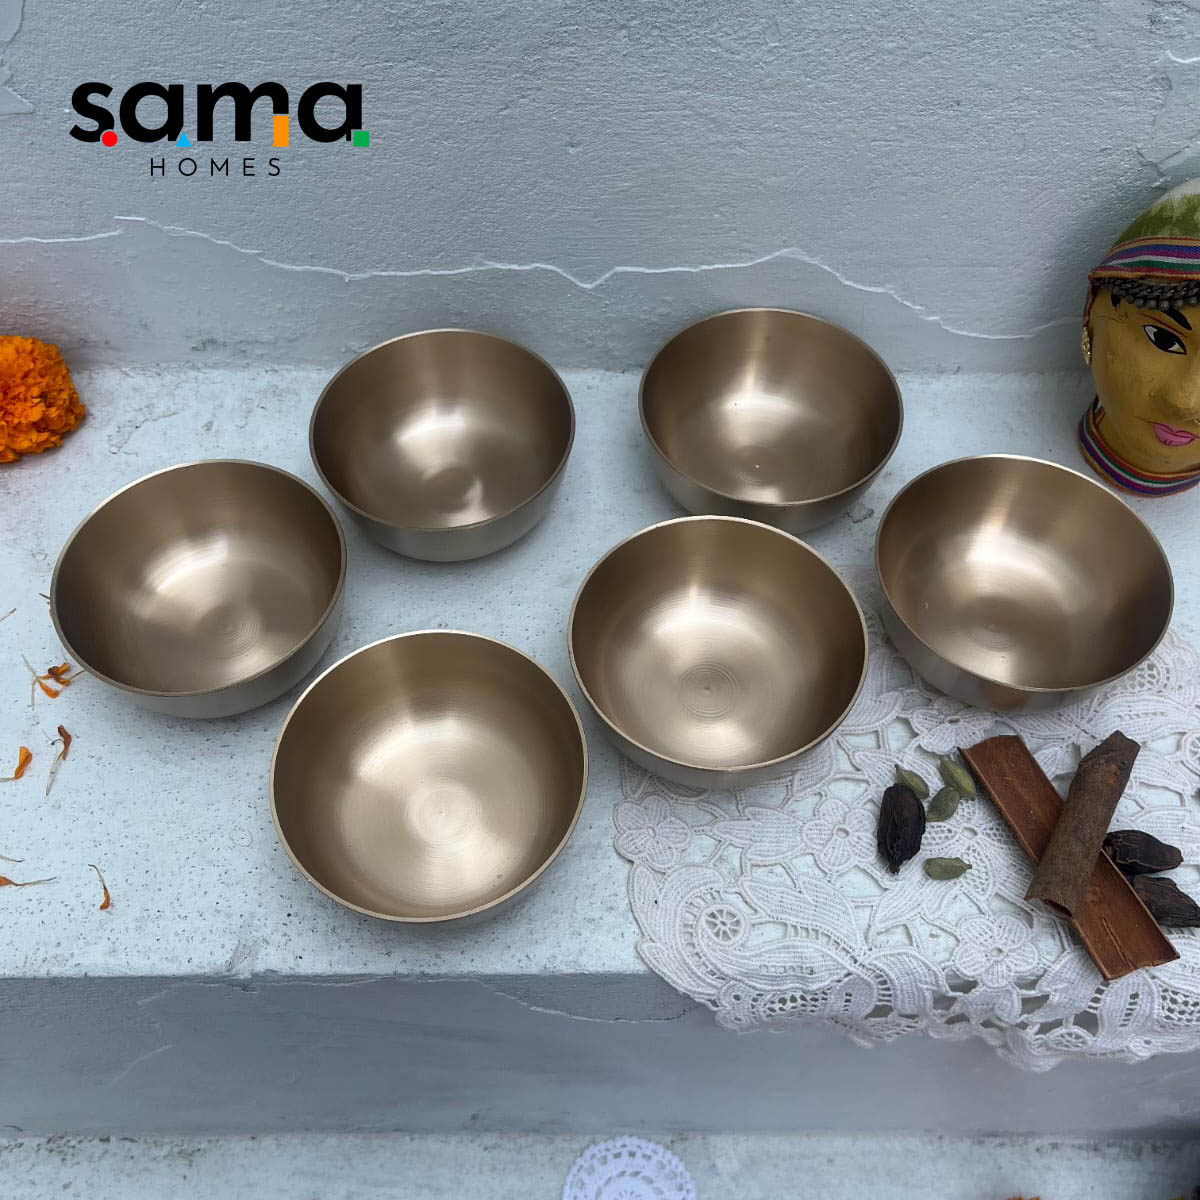 SAMA Homes - bronze kansa bowls or katori